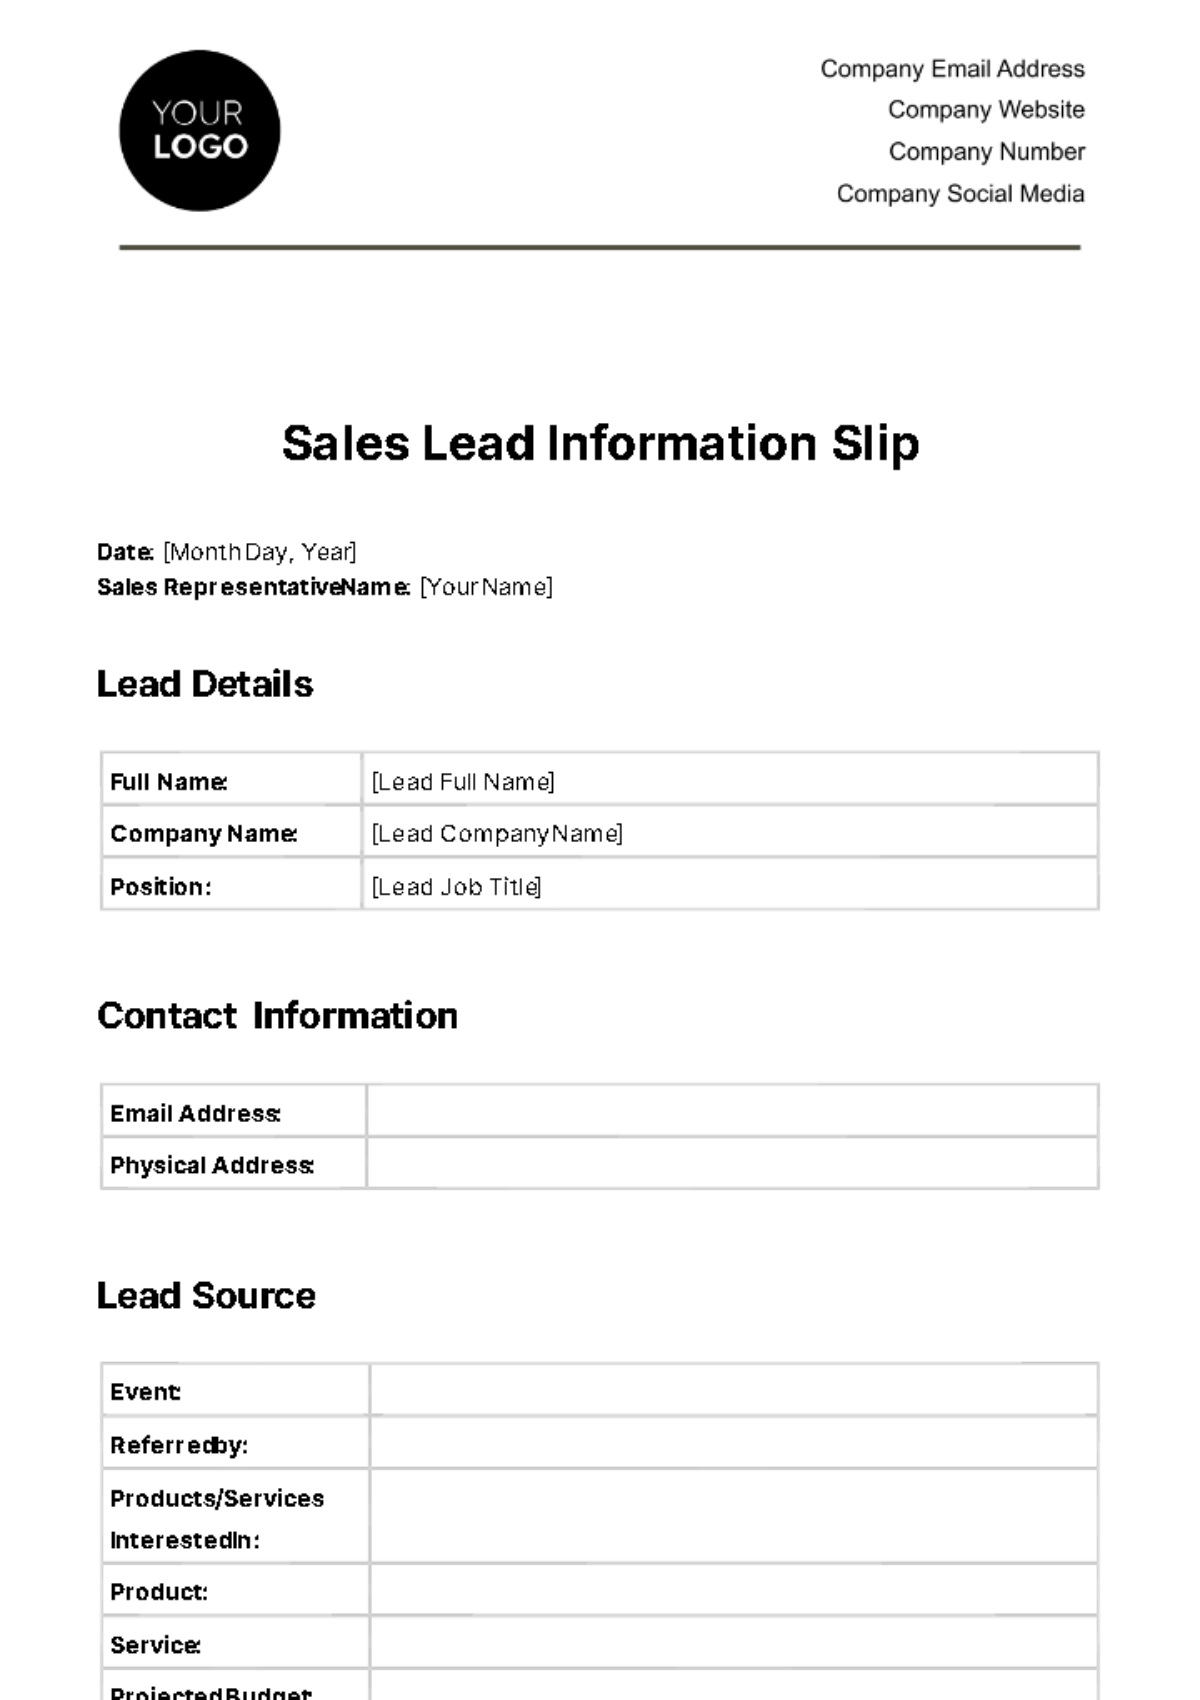 Sales Lead Information Slip Template